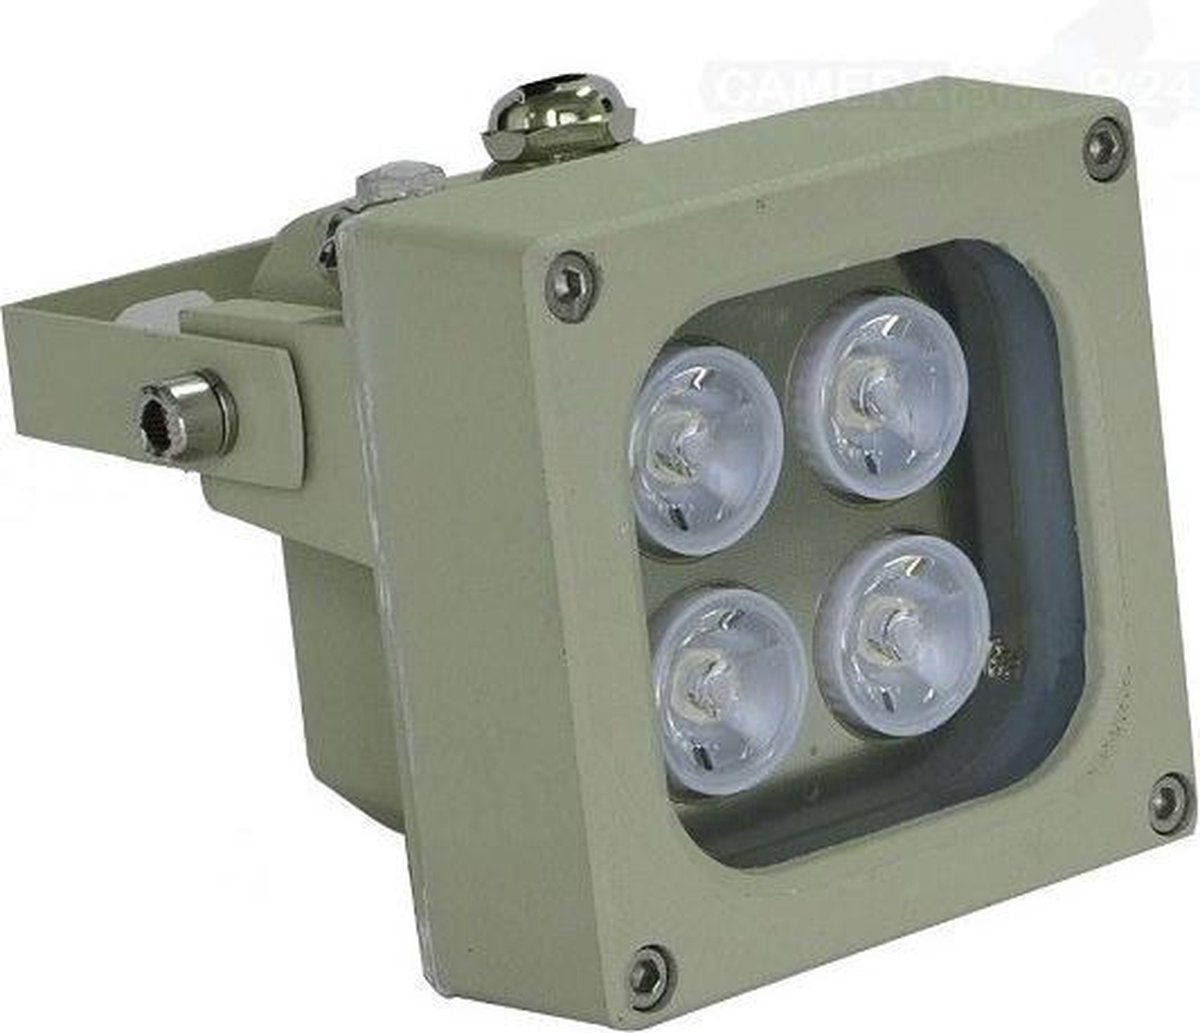 IR Illuminator - Verhoogt Nachtzicht Tot 80 Meter - 4 LEDs - Kijkhoek 45 Graden - Aluminium Behuizing - Binnen & Buiten - IR Lamp Camerabewaking